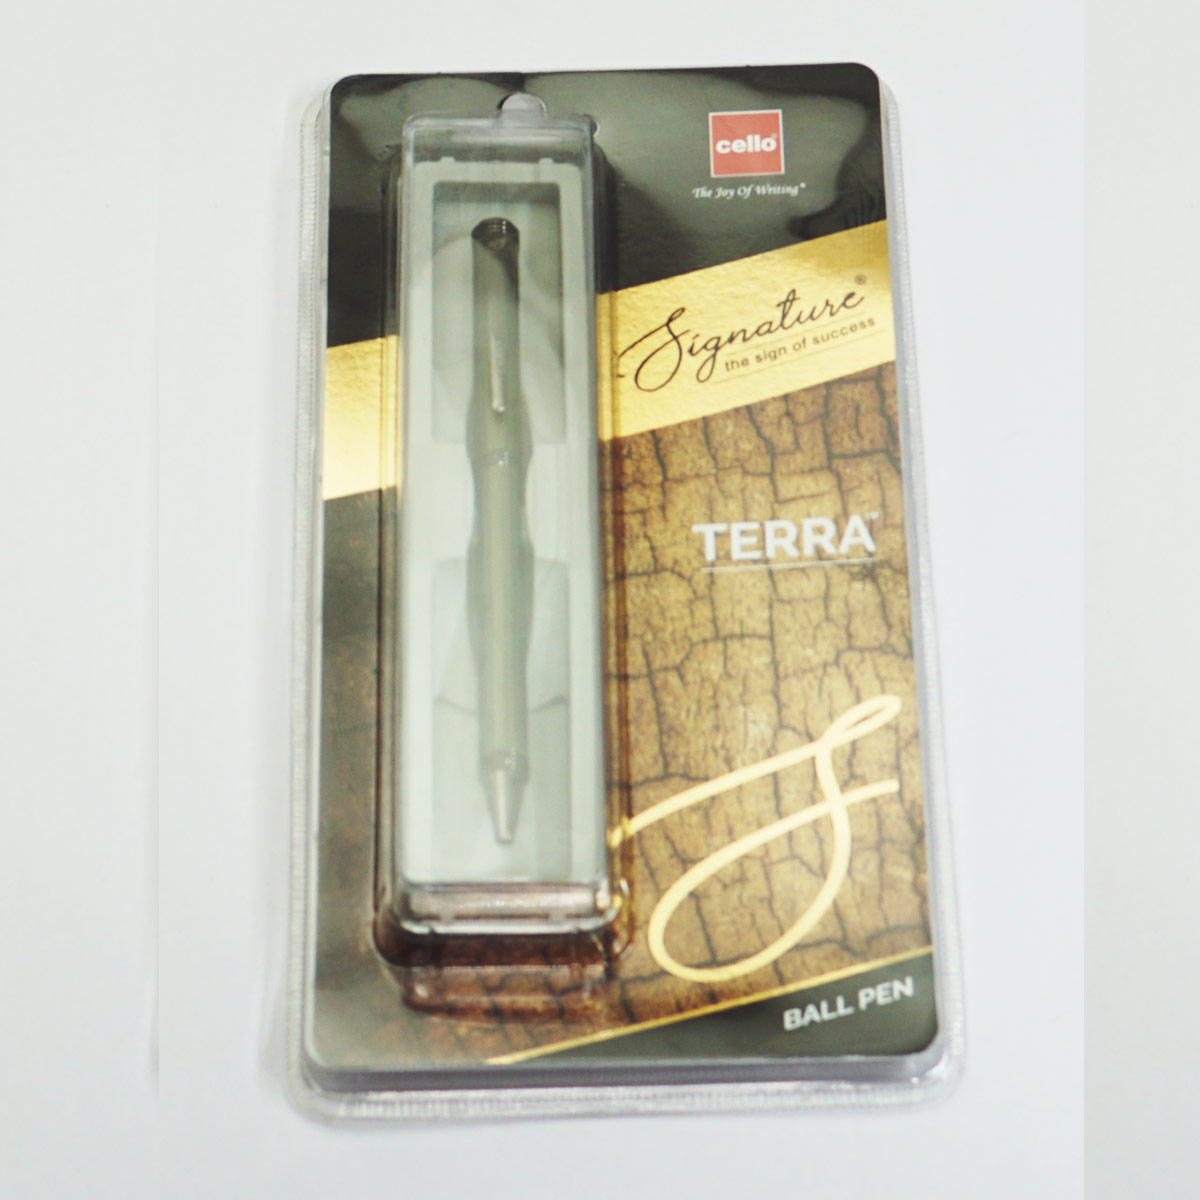 Cello Signature Terra Olive Green Color Body  With Fine Tip Twist Type Ball Pen SKU 23423